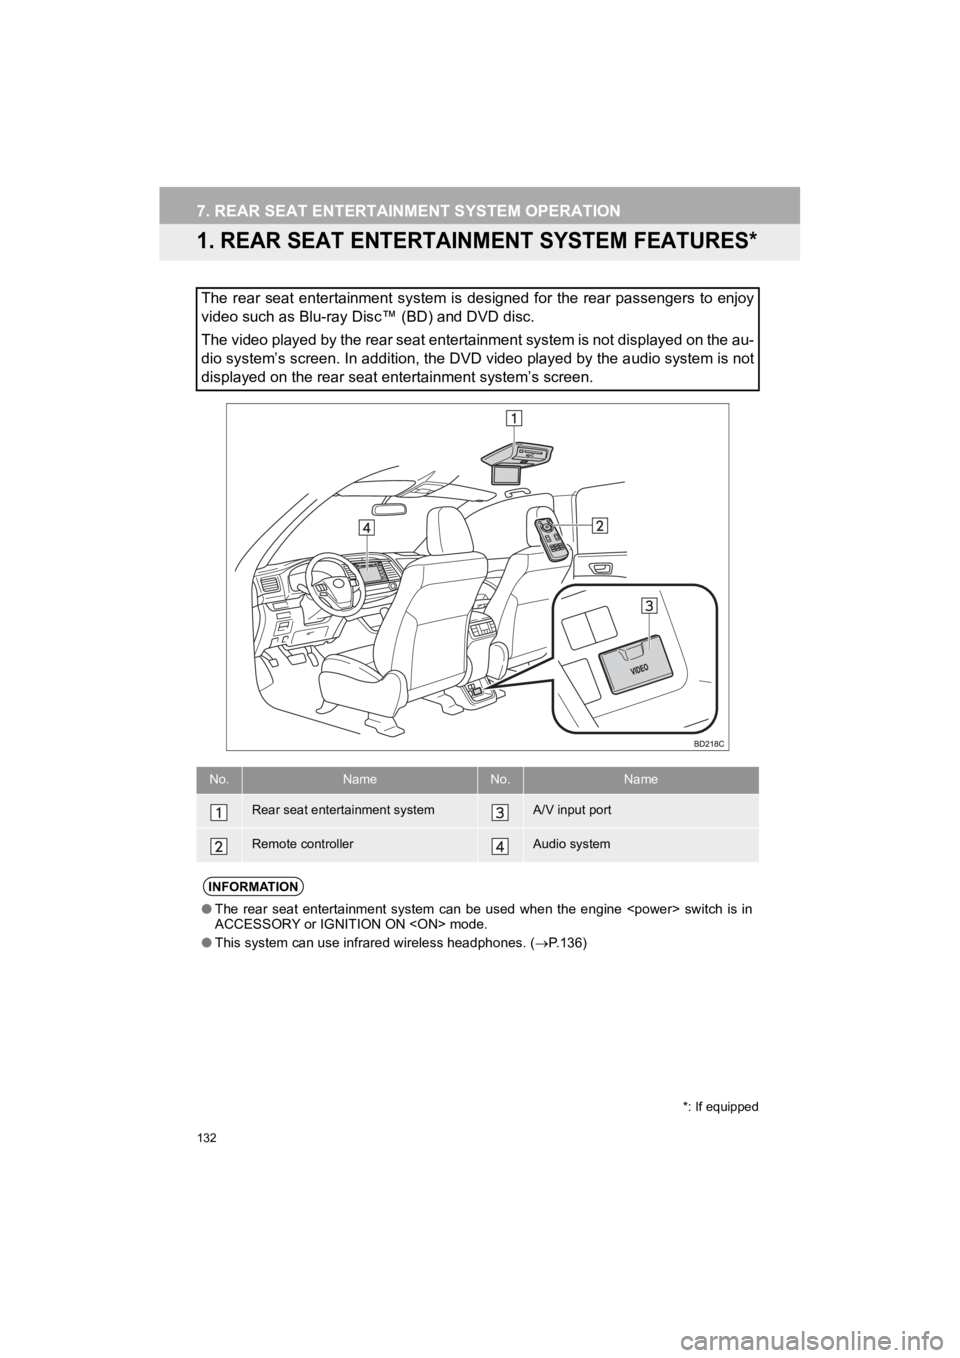 TOYOTA HIGHLANDER 2019  Accessories, Audio & Navigation (in English) 132
HIGHLANDER_Navi_U
7. REAR SEAT ENTERTAINMENT SYSTEM OPERATION
1. REAR SEAT ENTERTAINMENT SYSTEM FEATURES*
The  rear  seat  entertainment  system is designed  for the  rear  pas sengers to  enjoy
v